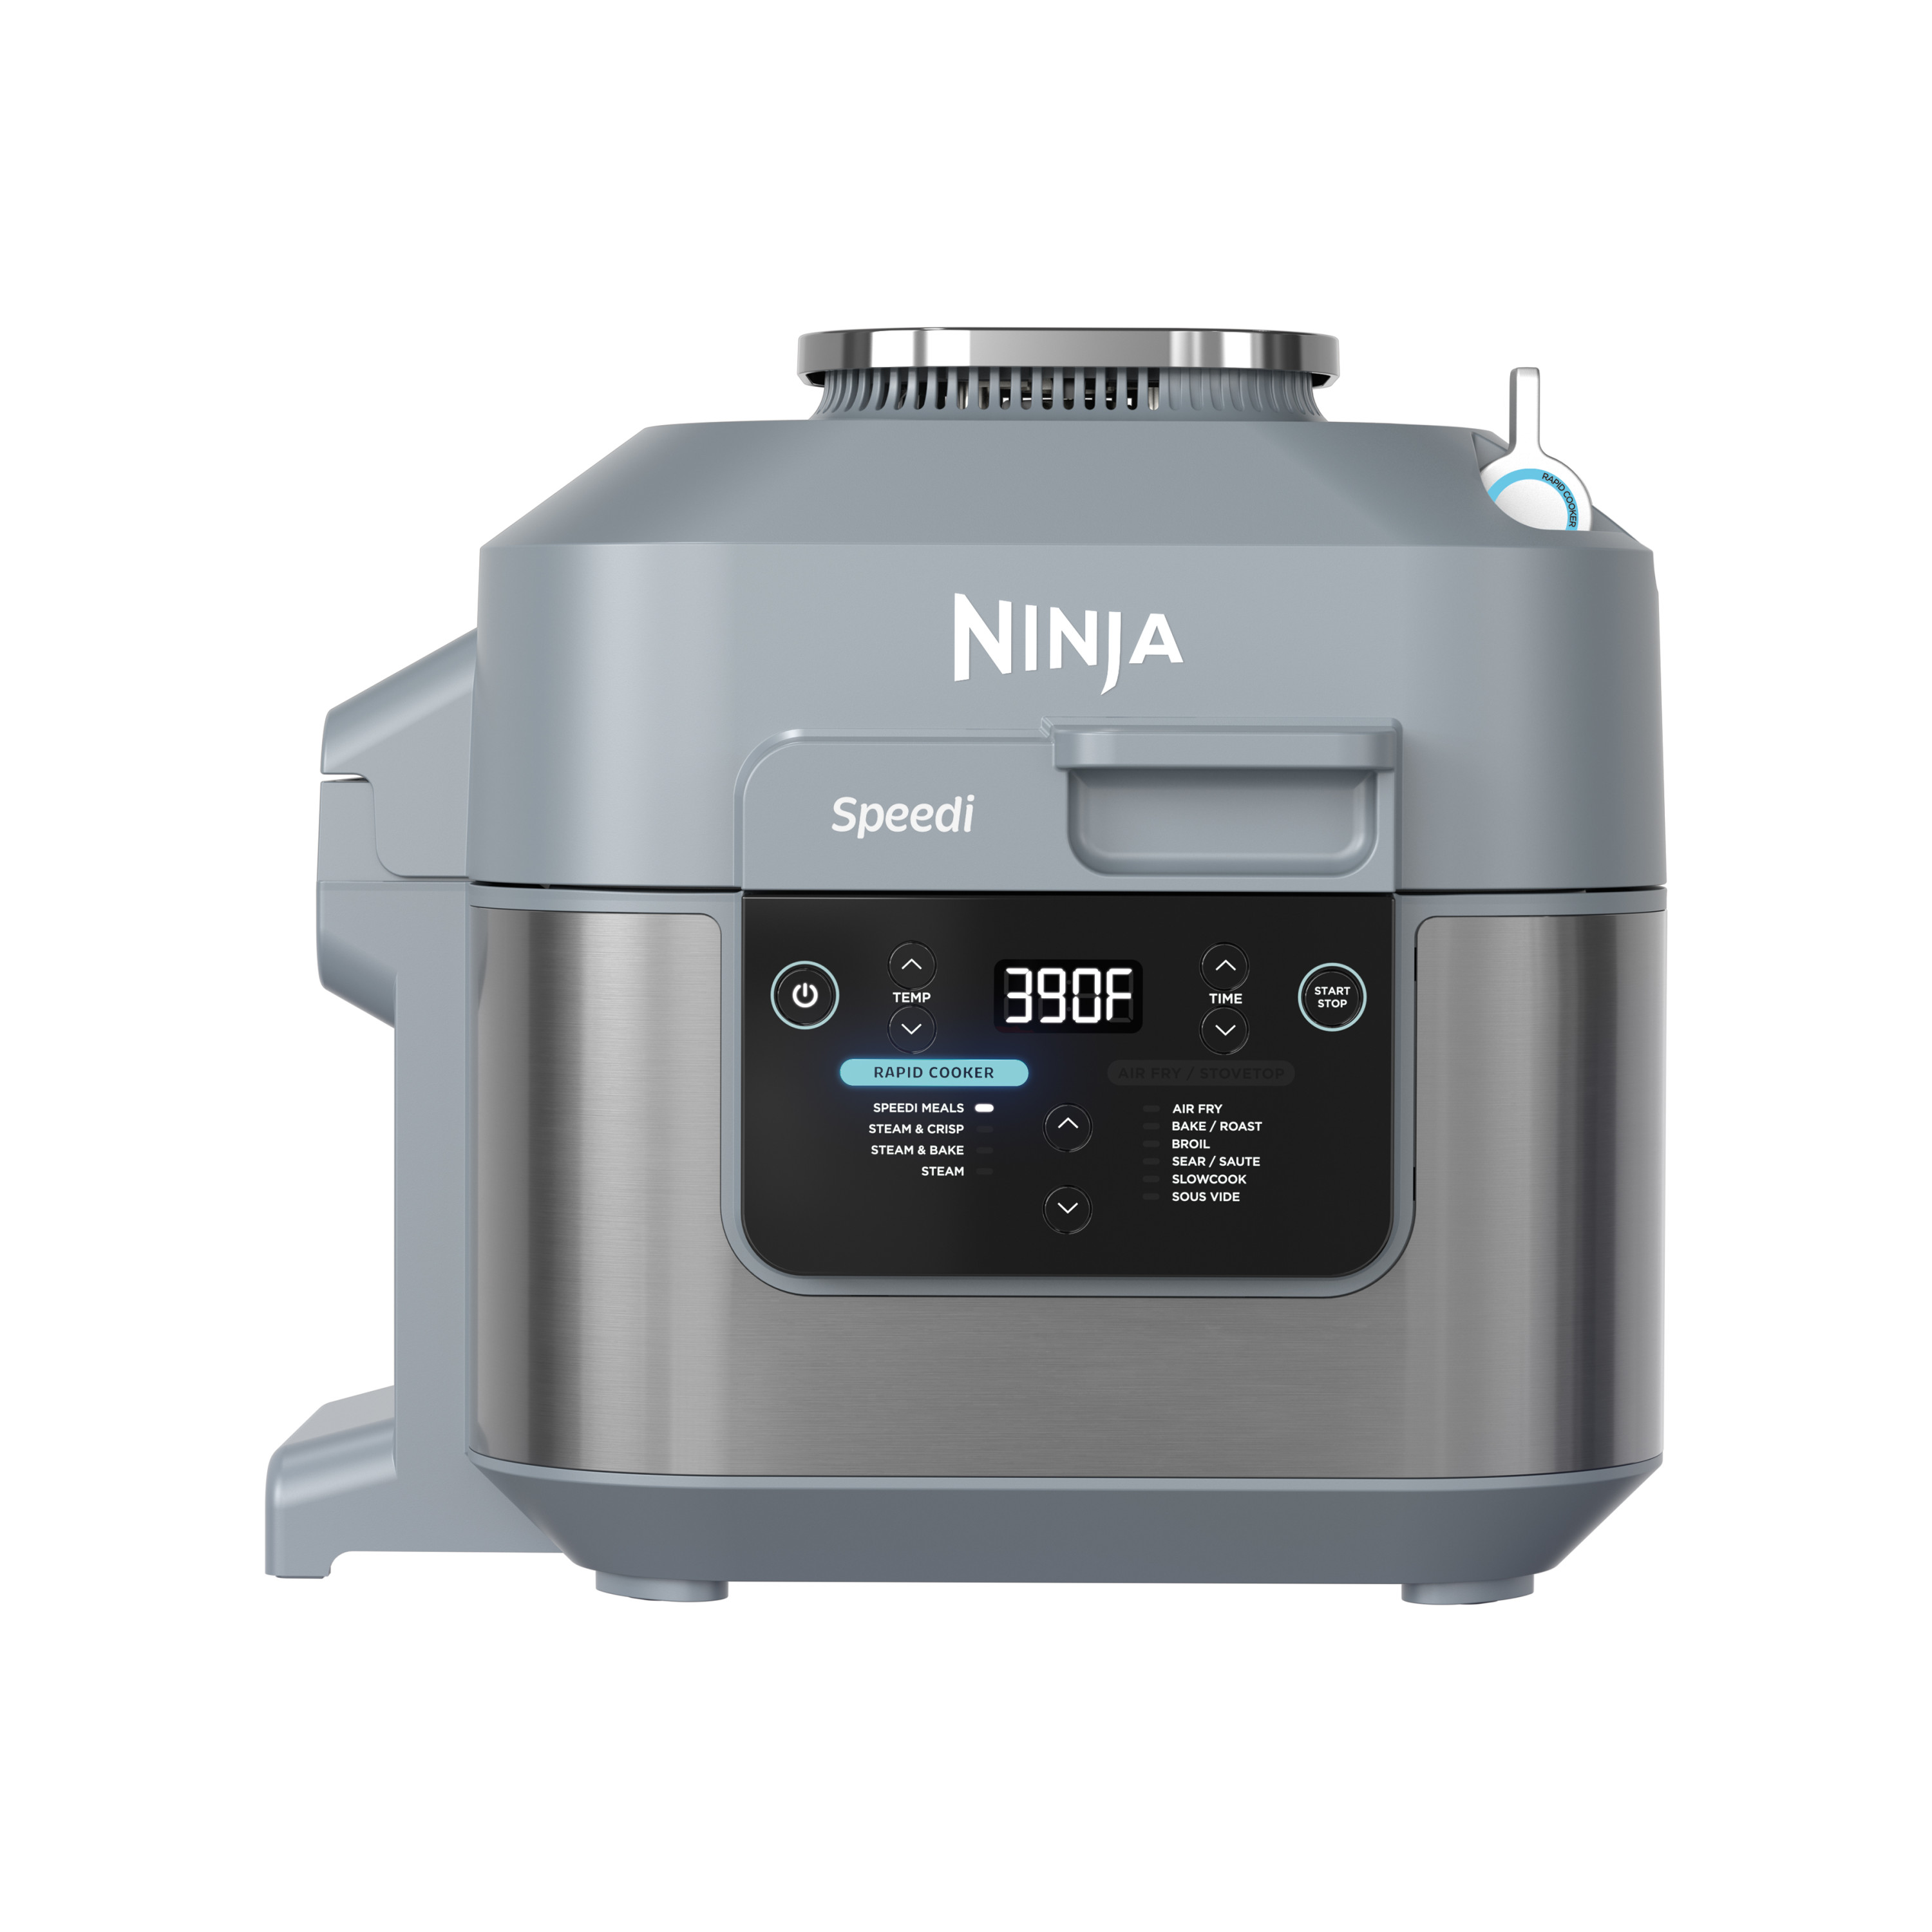 Ninja Speedi Rapid Cooker & Air Fryer, SF300, 6-Qt. Capacity, 10-in-1 Functionality, Meal Maker, Sea Salt Gray - image 1 of 17